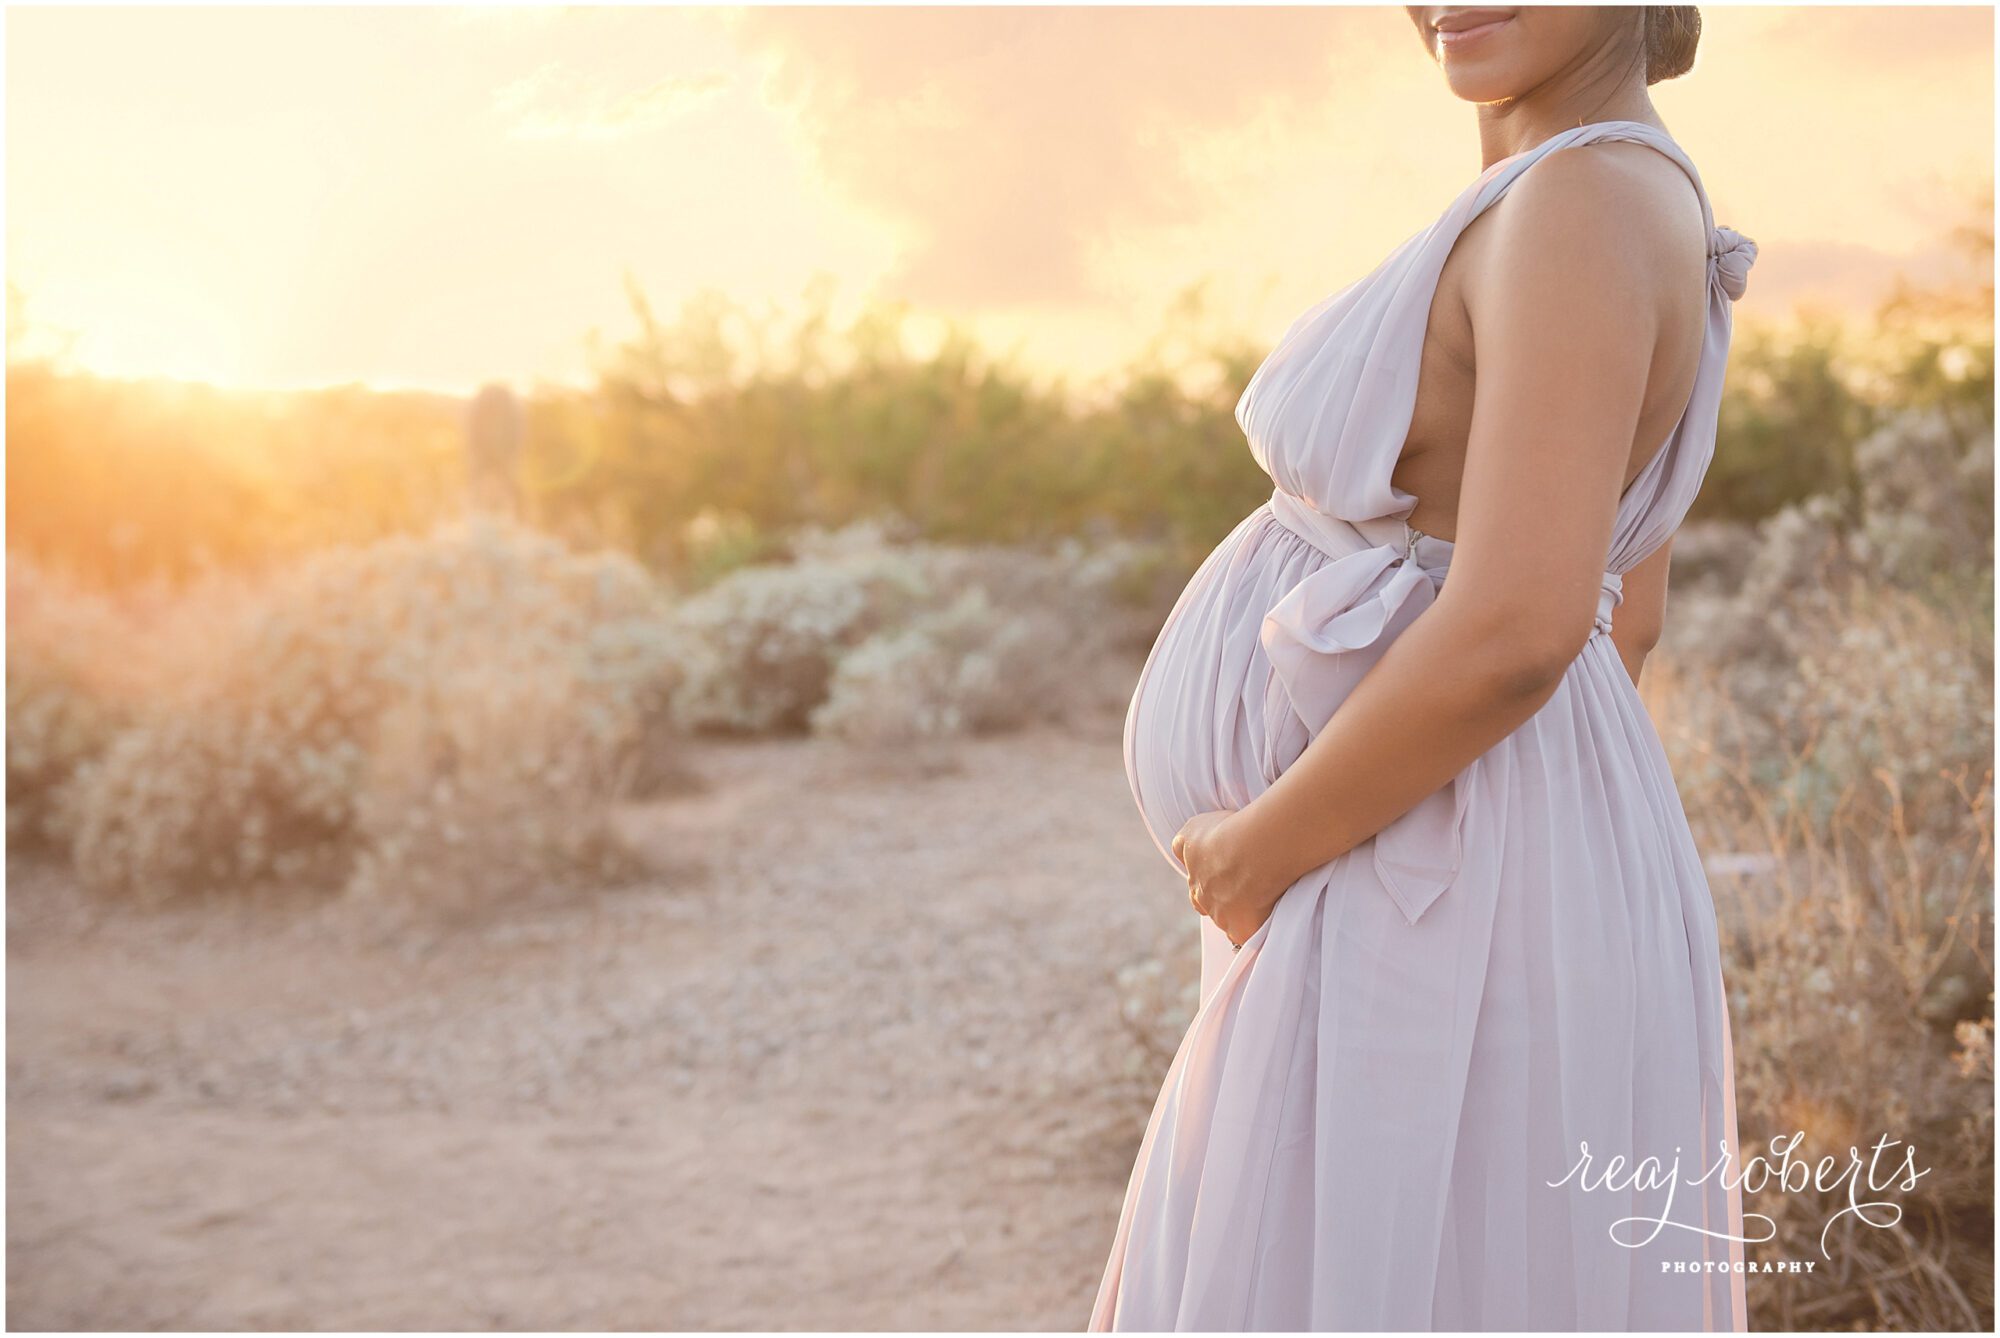 Desert sunset maternity session | Reaj Roberts Photography